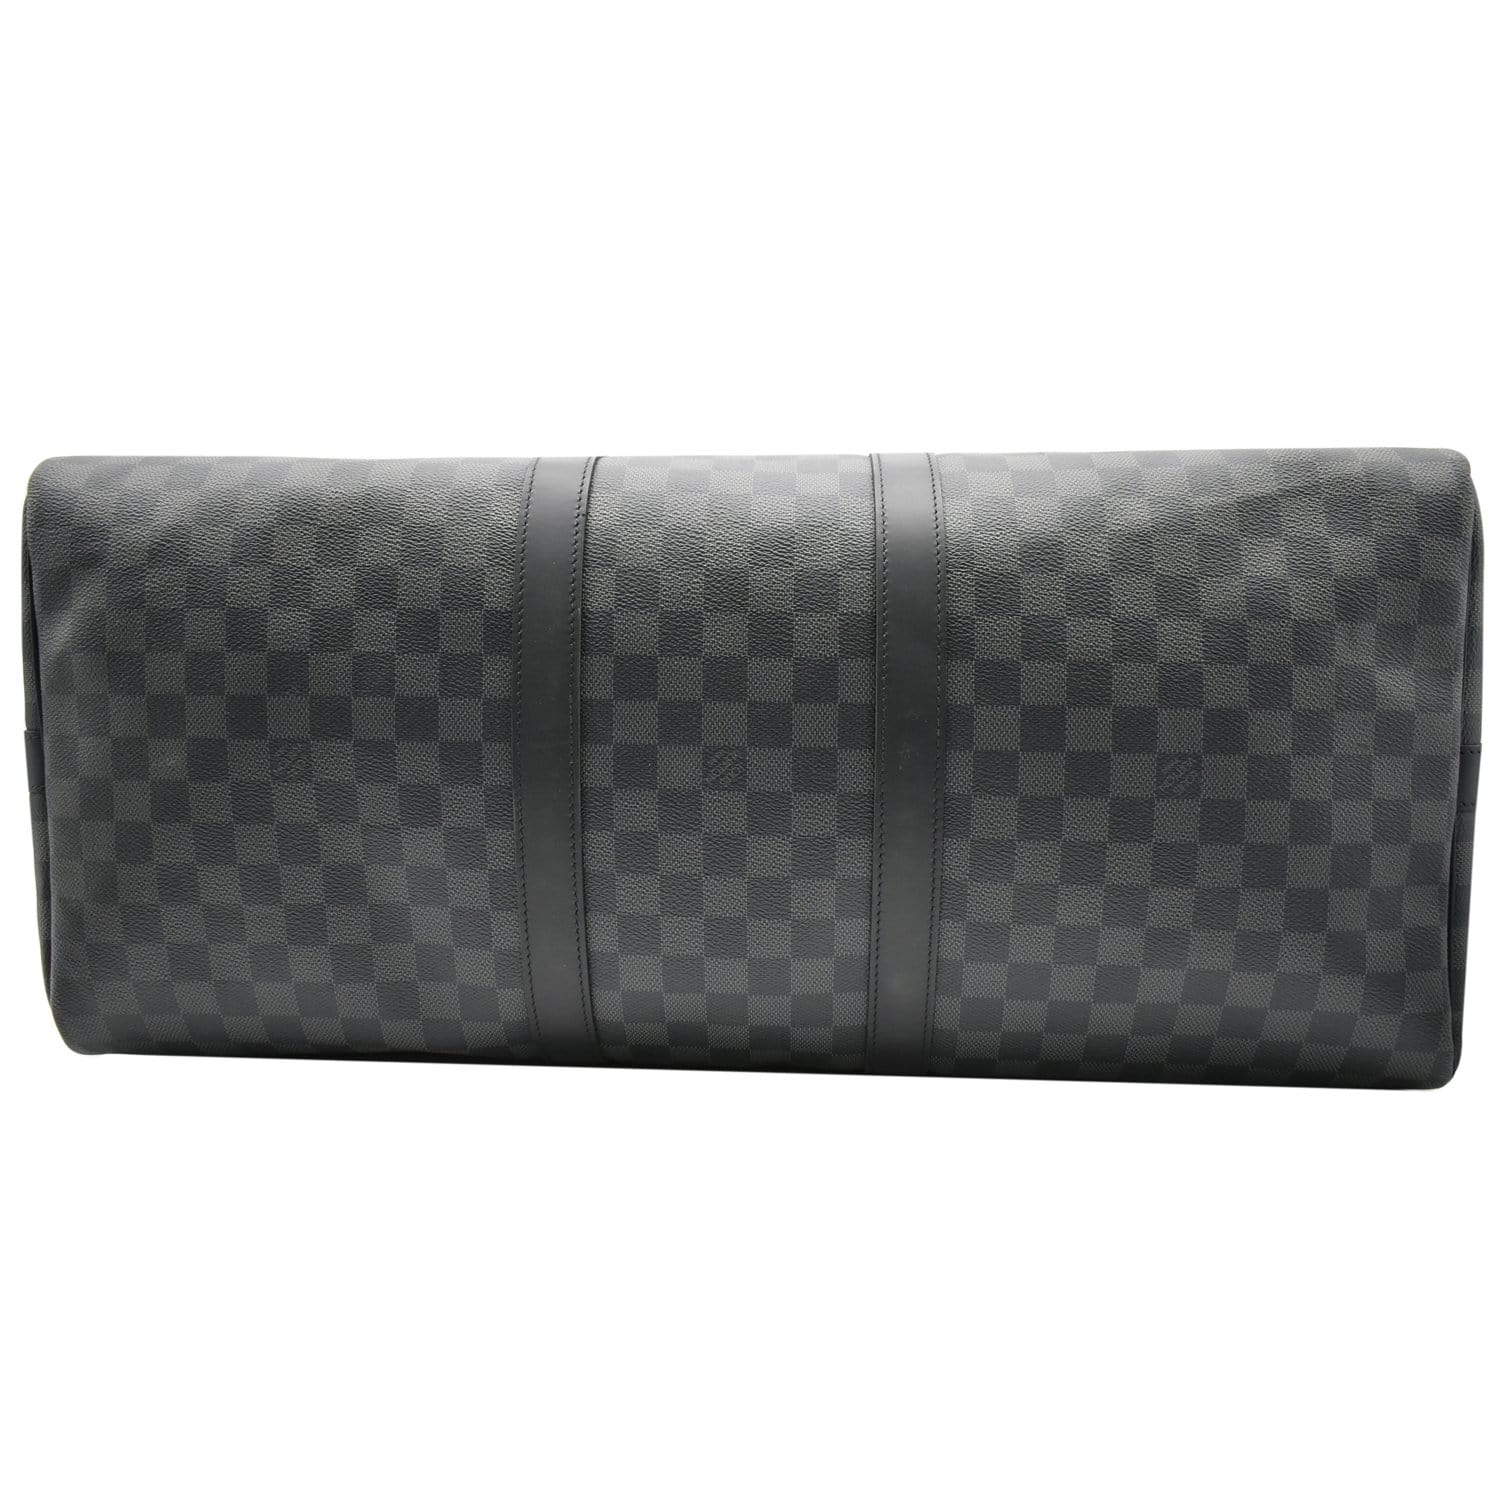 Louis Vuitton Keepall Bandouliere Bag Damier Graphite 55 Black